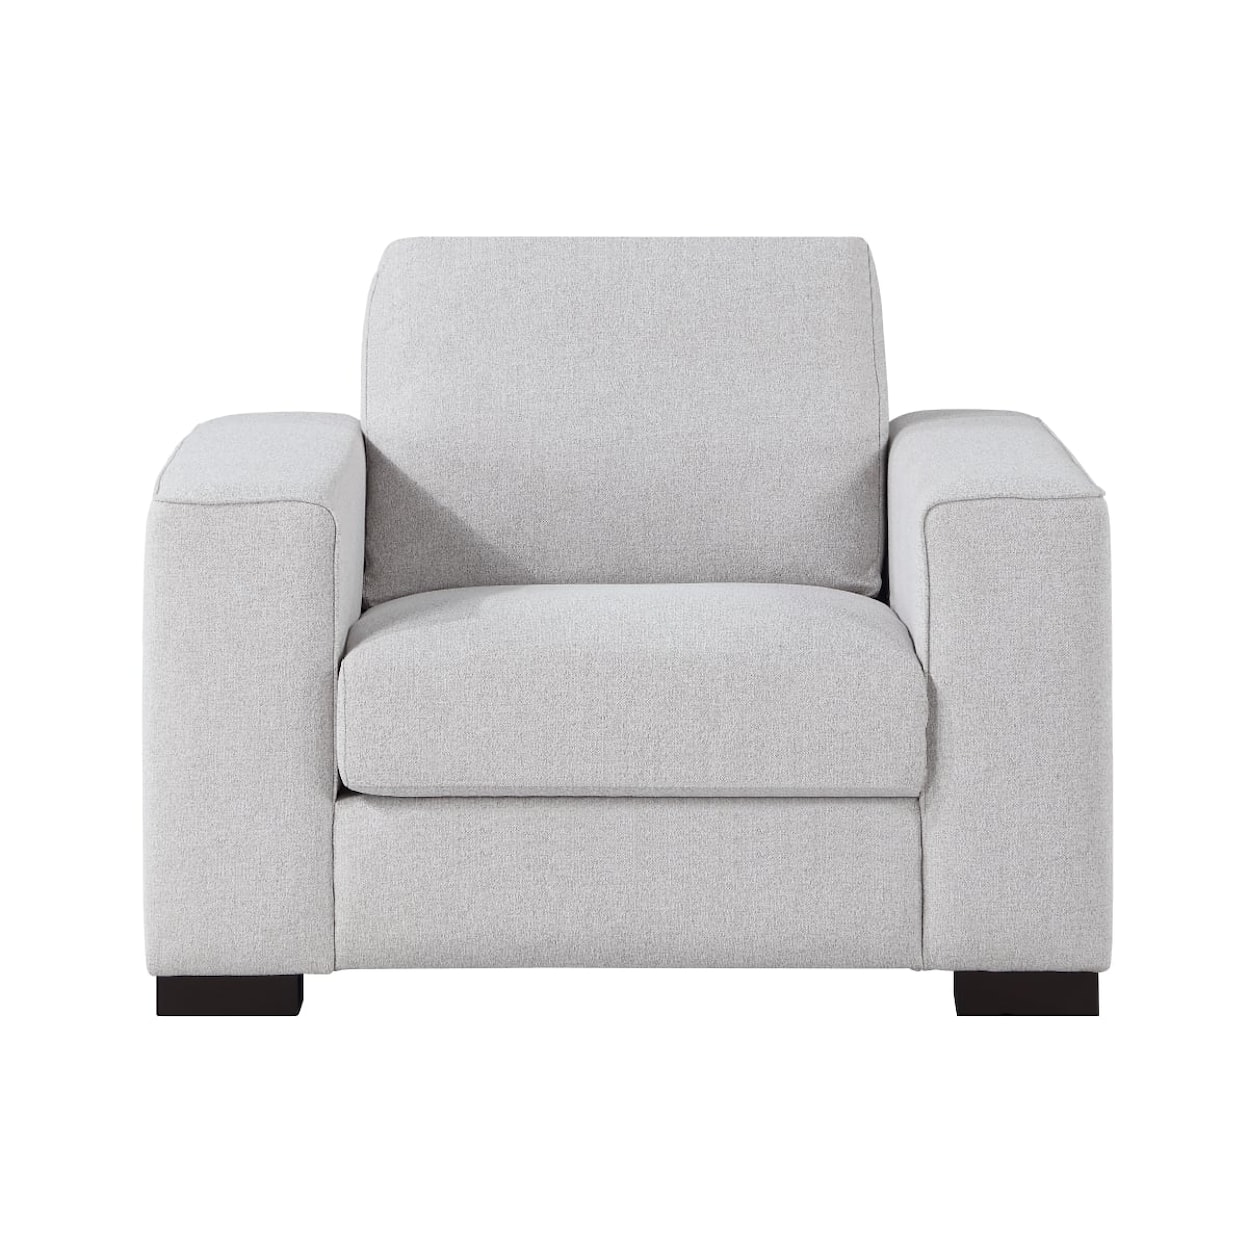 Homelegance Furniture Solaris Chair